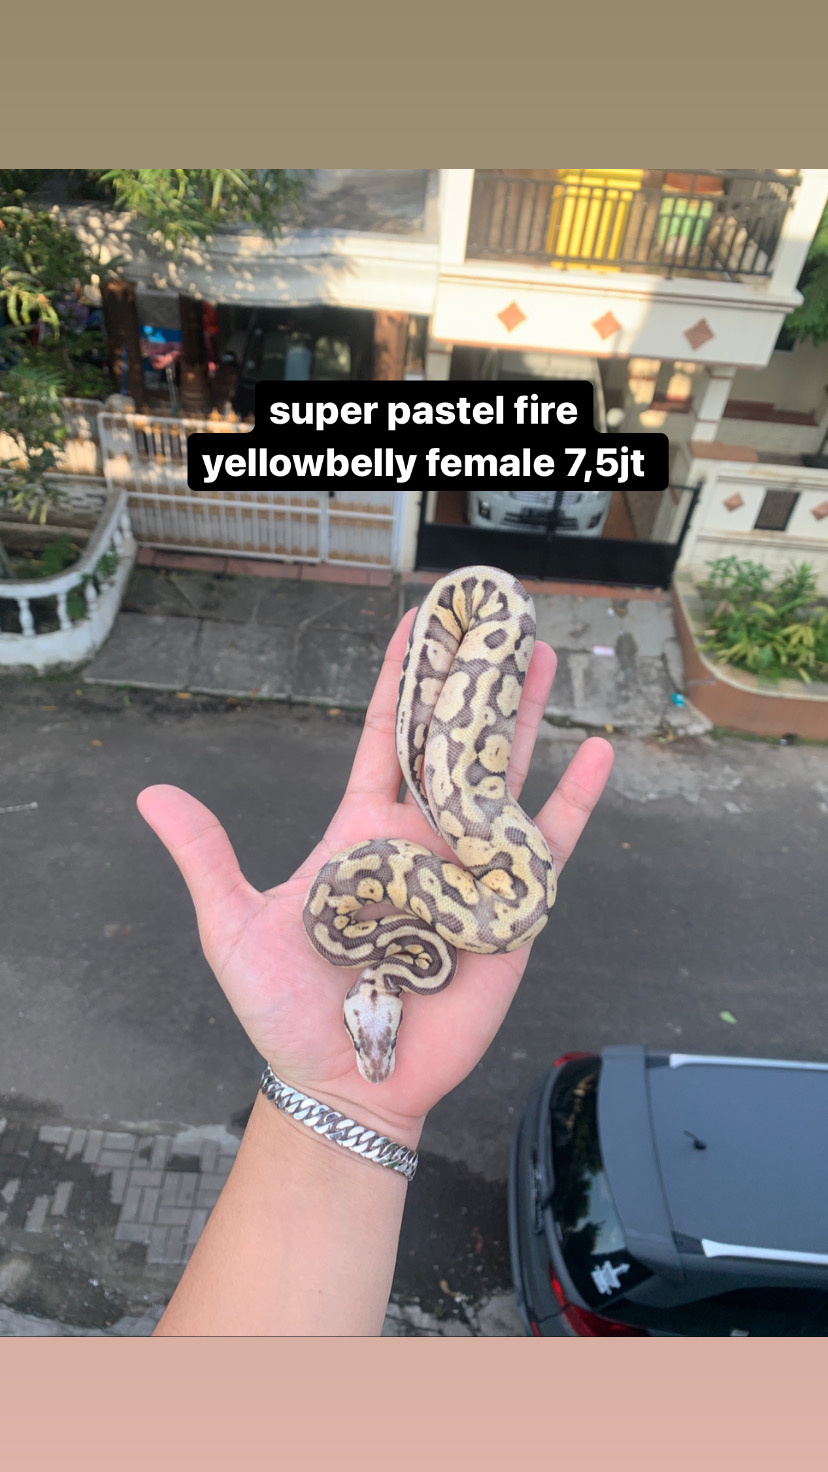 ball python female super pastel fire yellowbelly